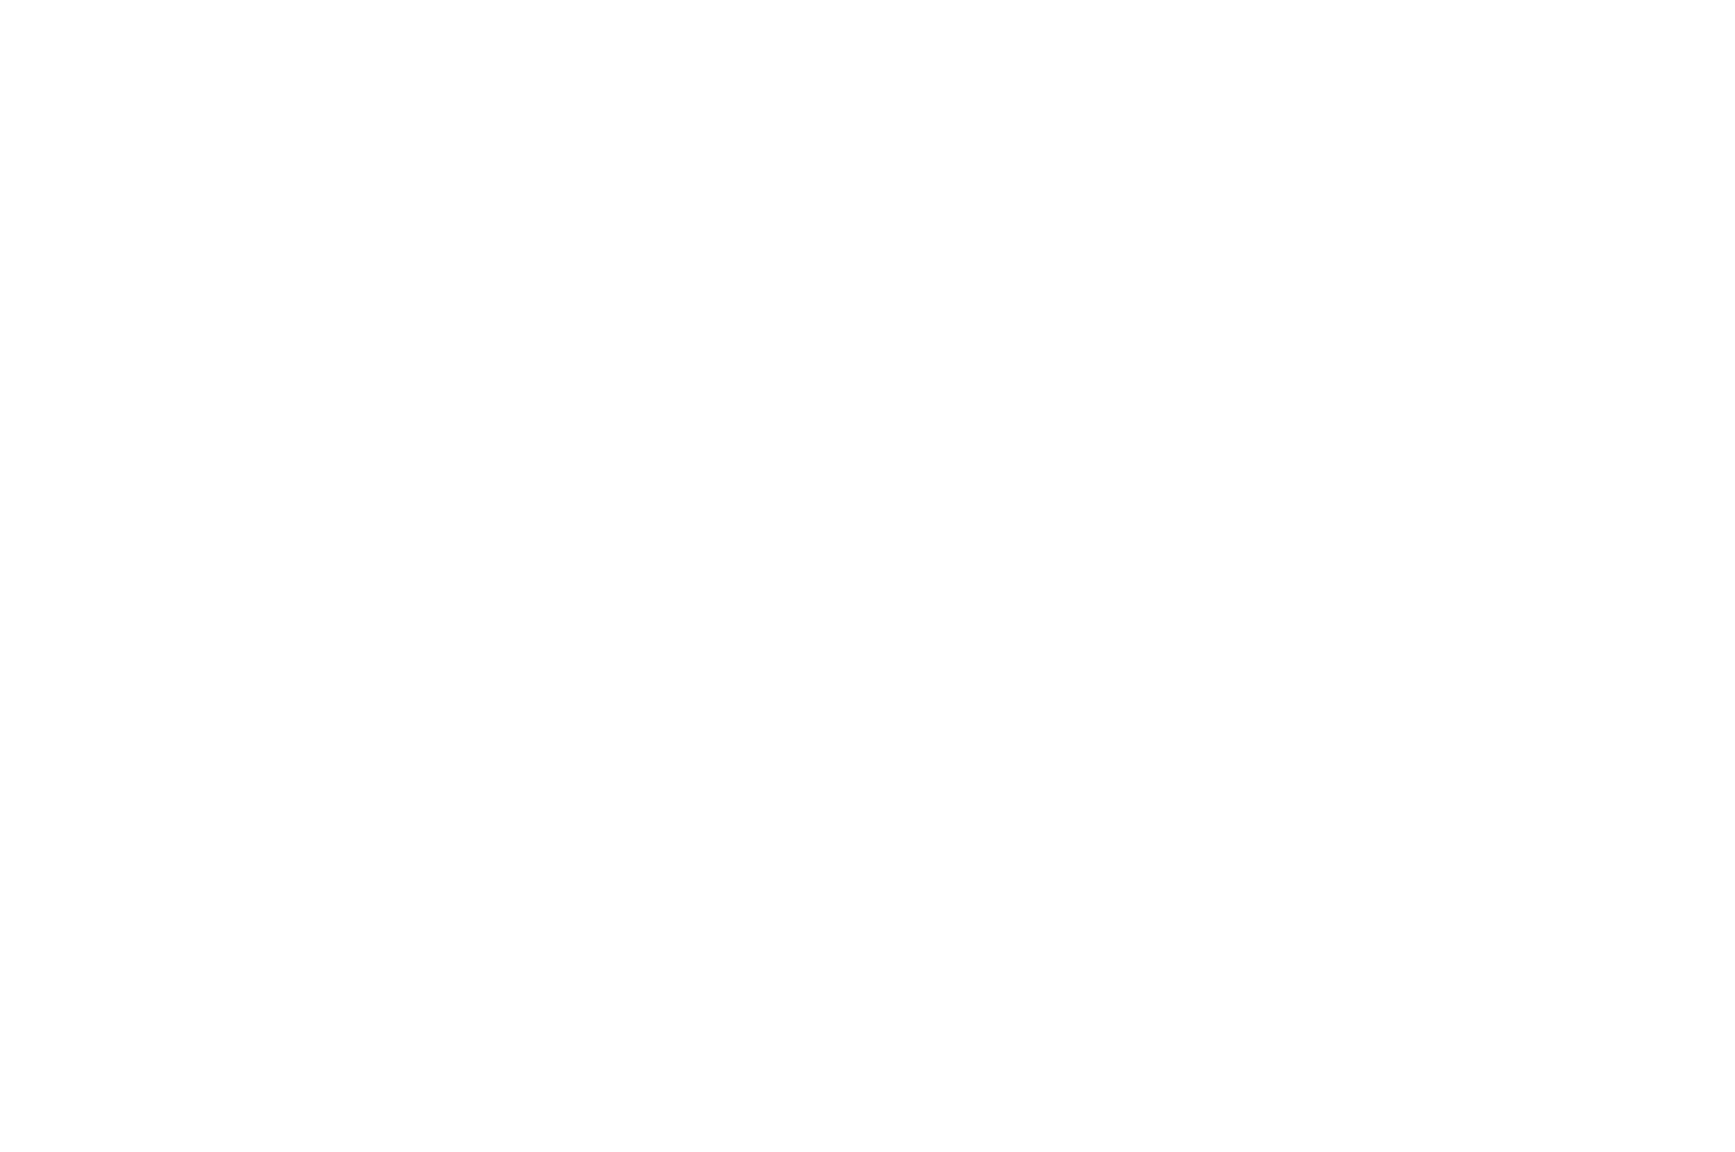 NOMINATED - BEST BEST SHORT FILM UNDER 5K - THE MONKEY BREAD TREE AWARDS 2016.png